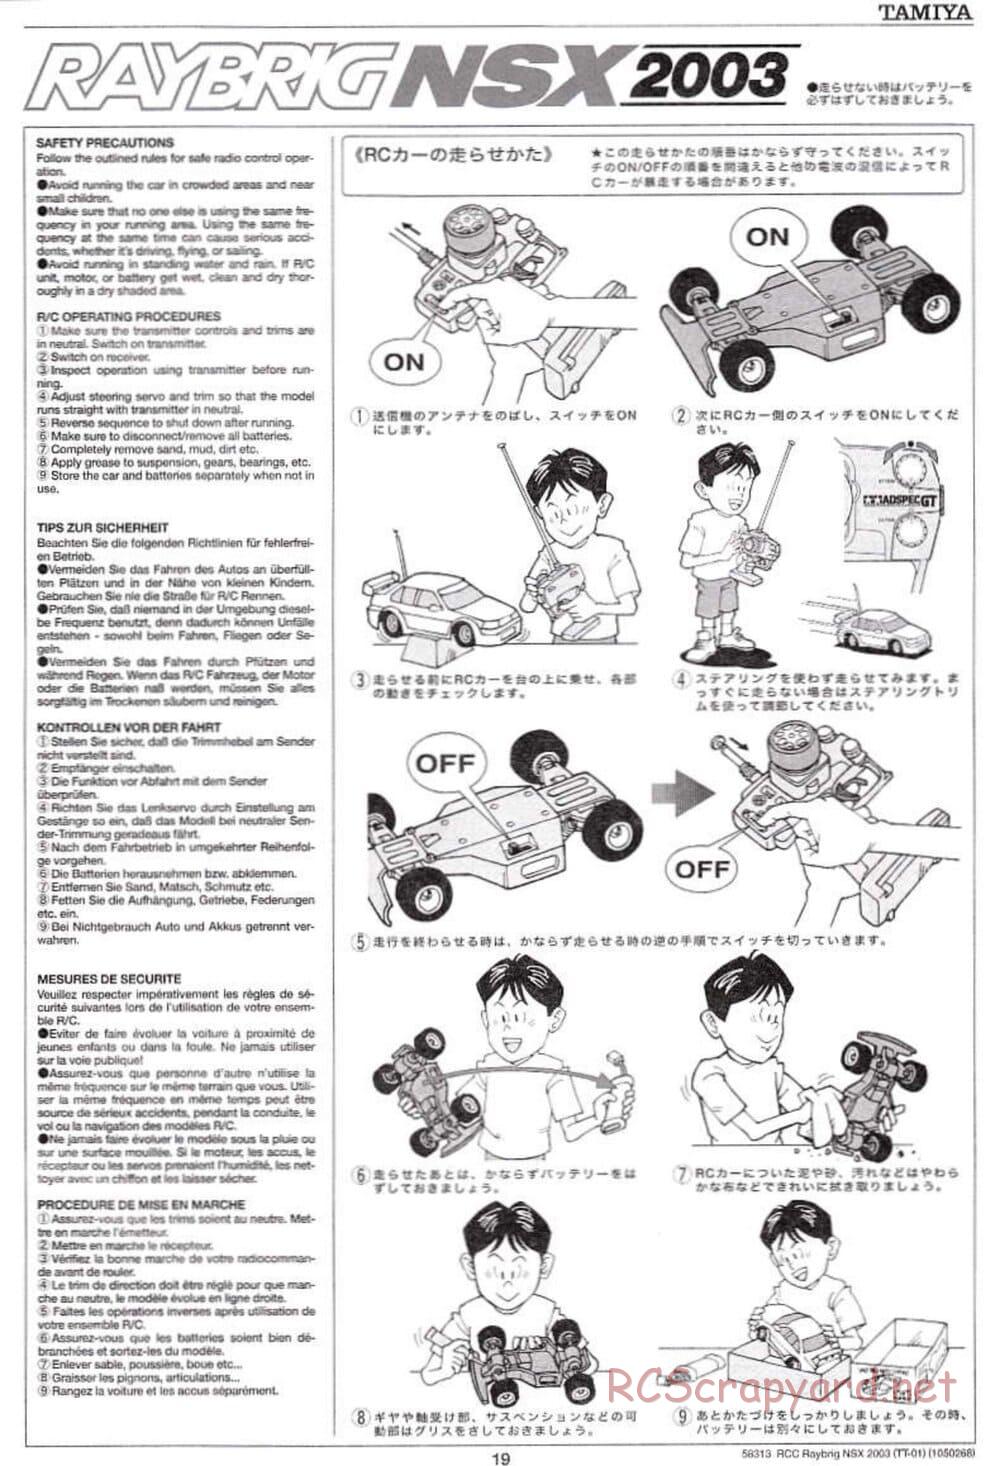 Tamiya - Raybrig NSX 2003 - TT-01 Chassis - Manual - Page 19